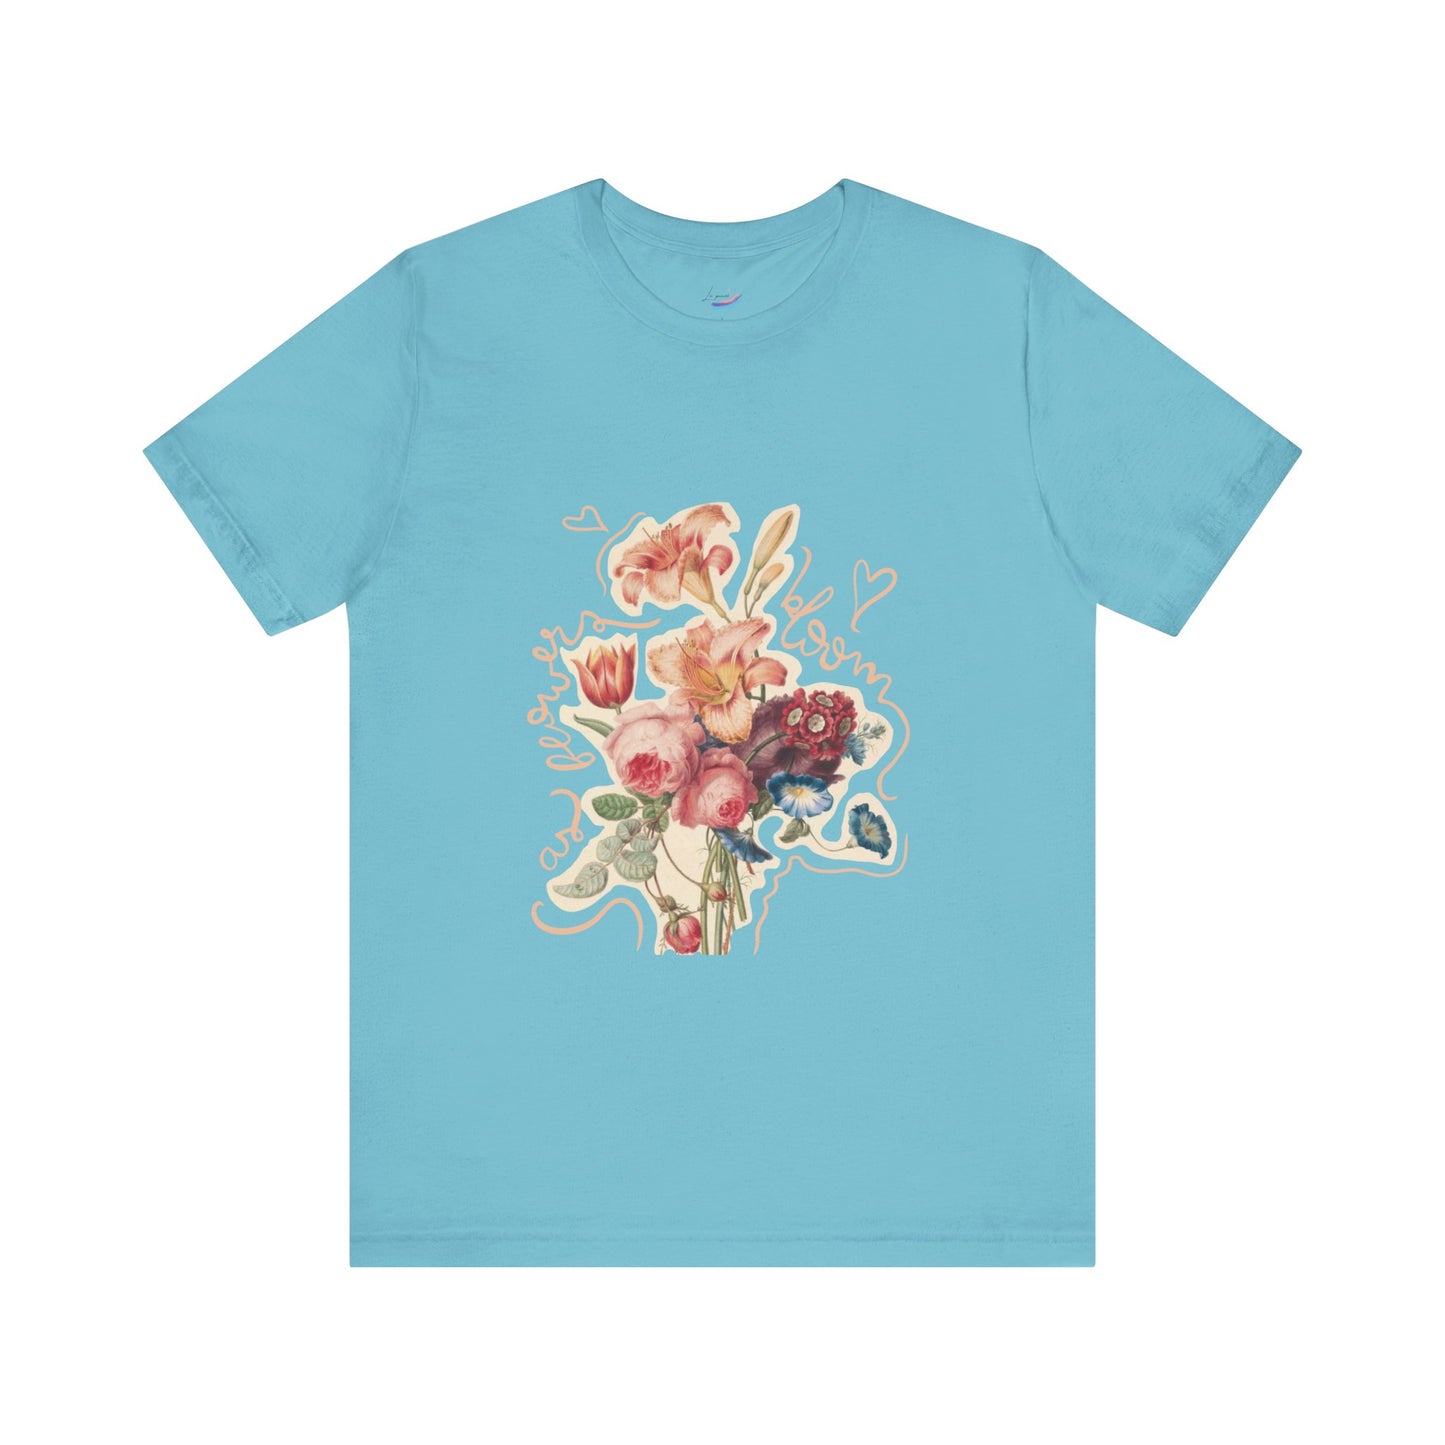 Blossoming Beauty Premium Cotton T-Shirt Artwear